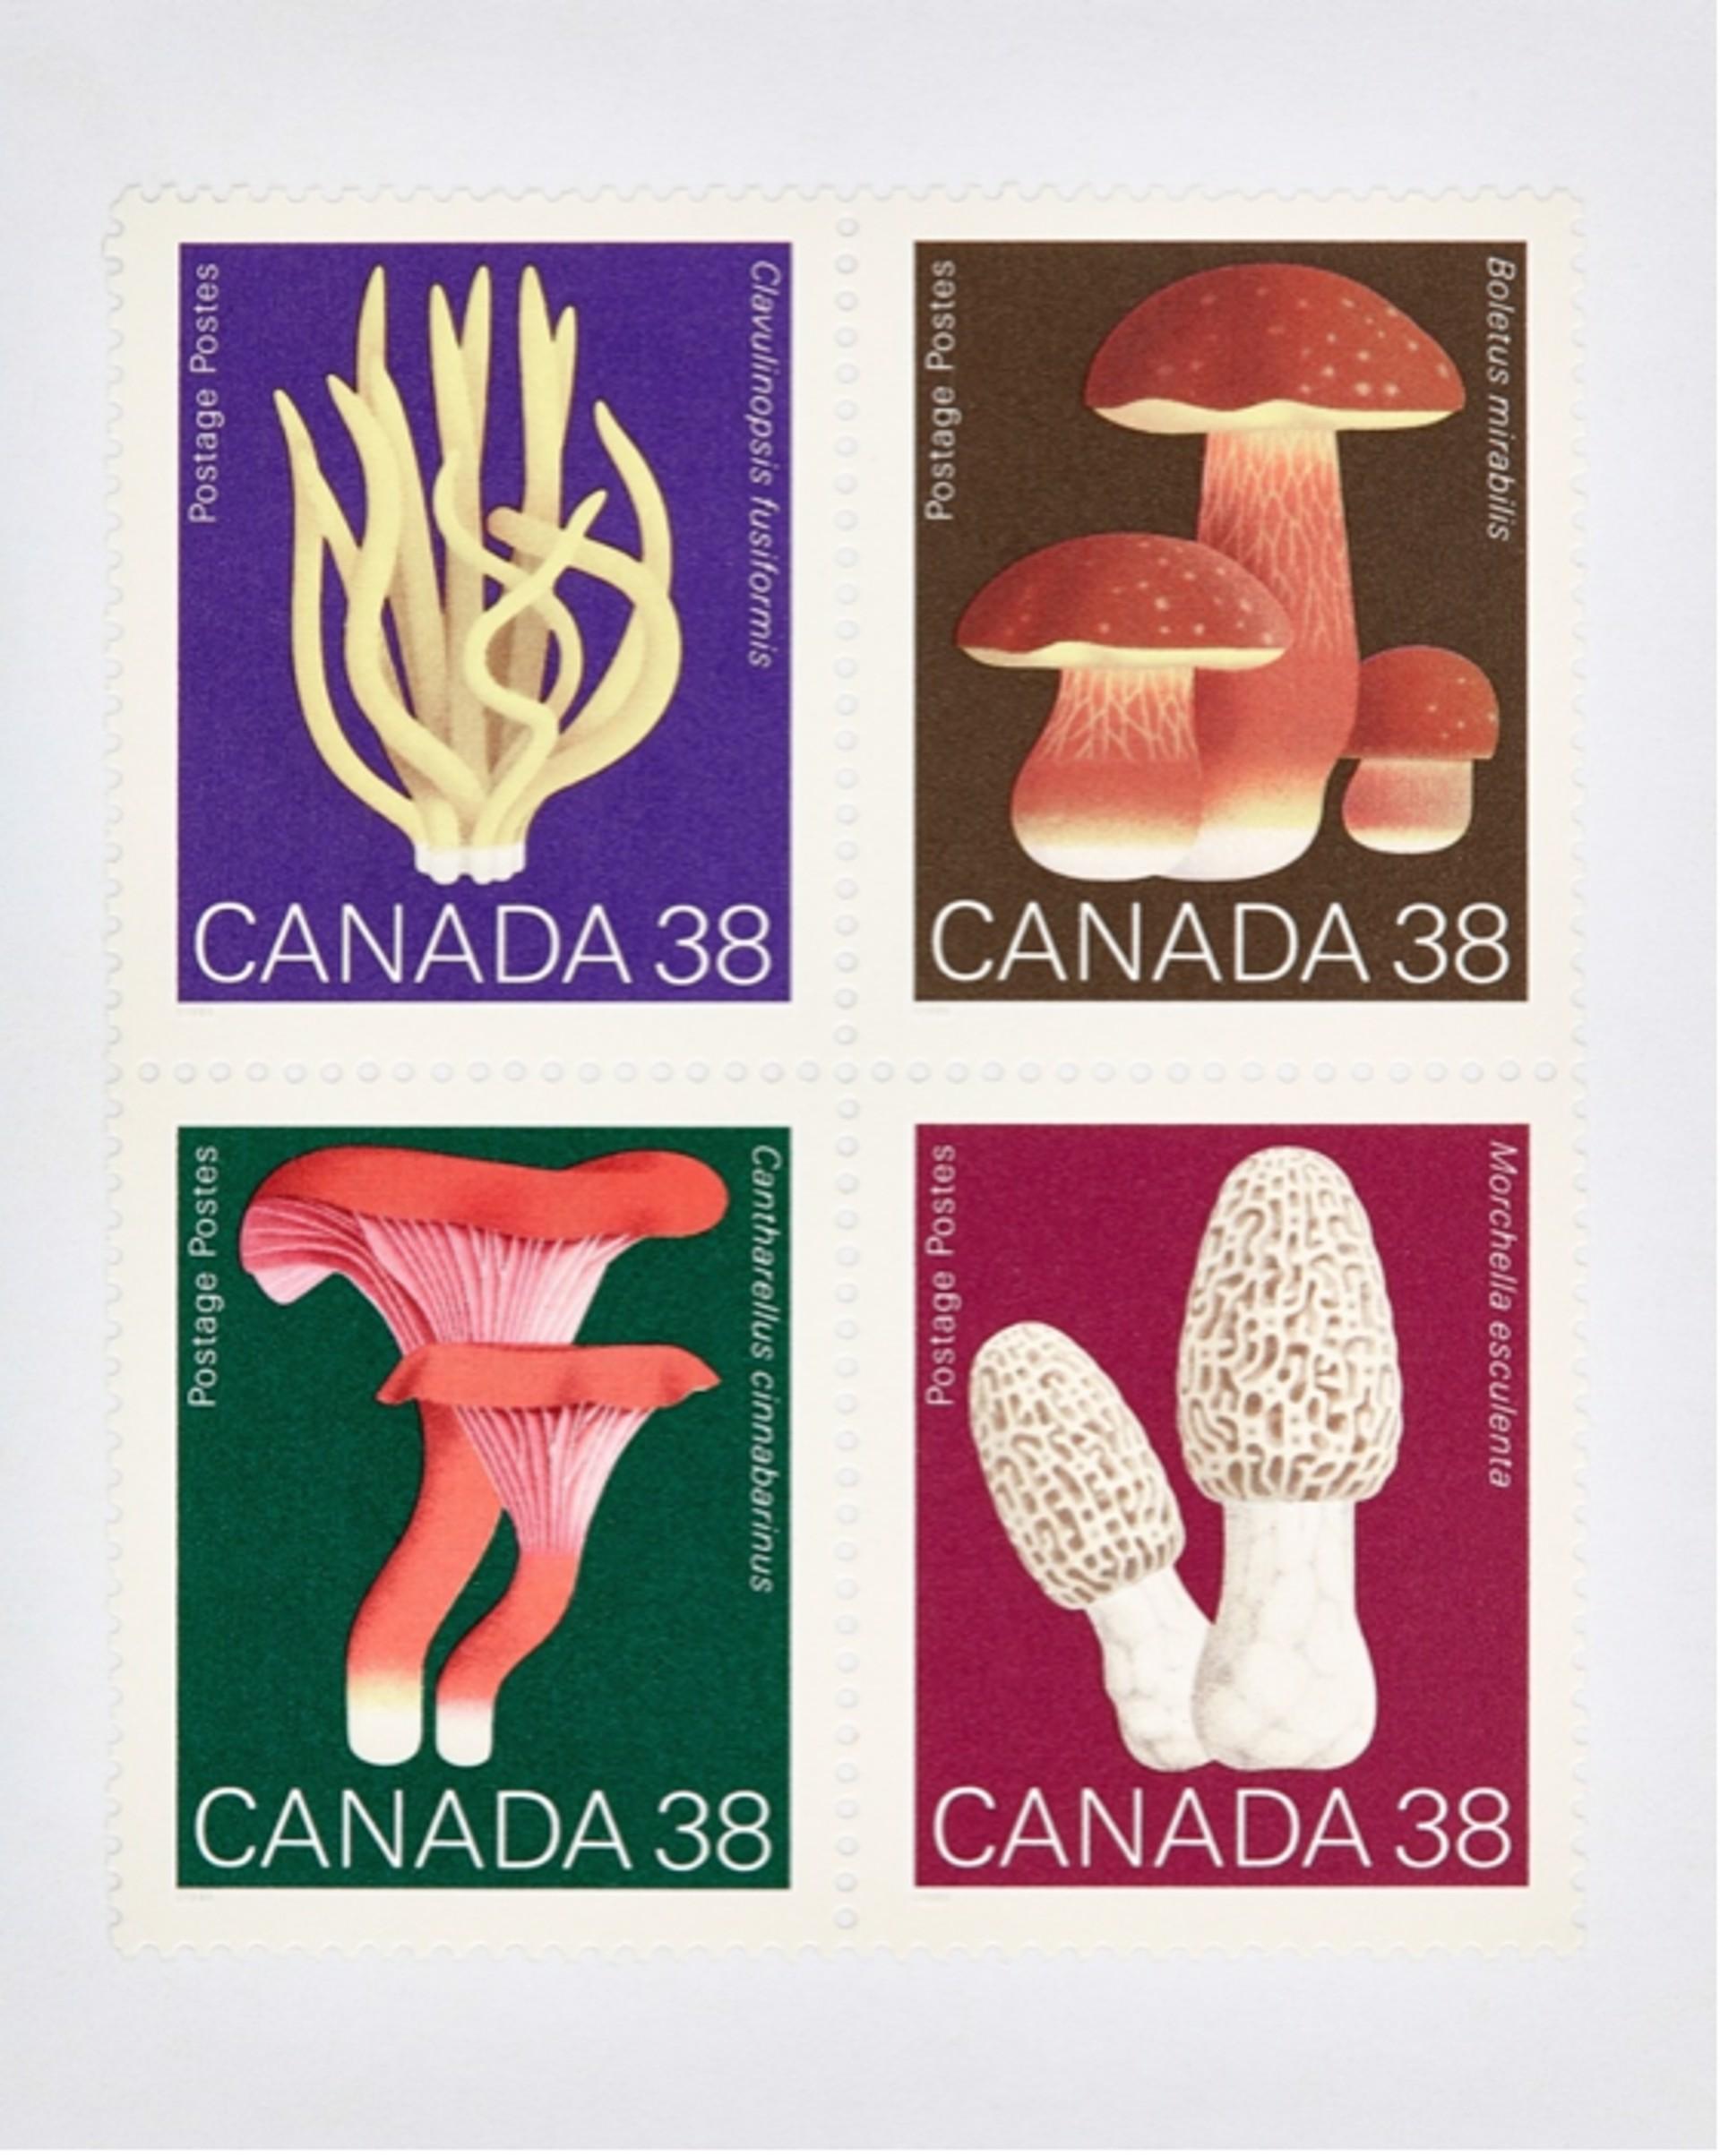 Peter Andrew Lusztyk – Kanada Pilz, Fotografie 2021, Nachdruck